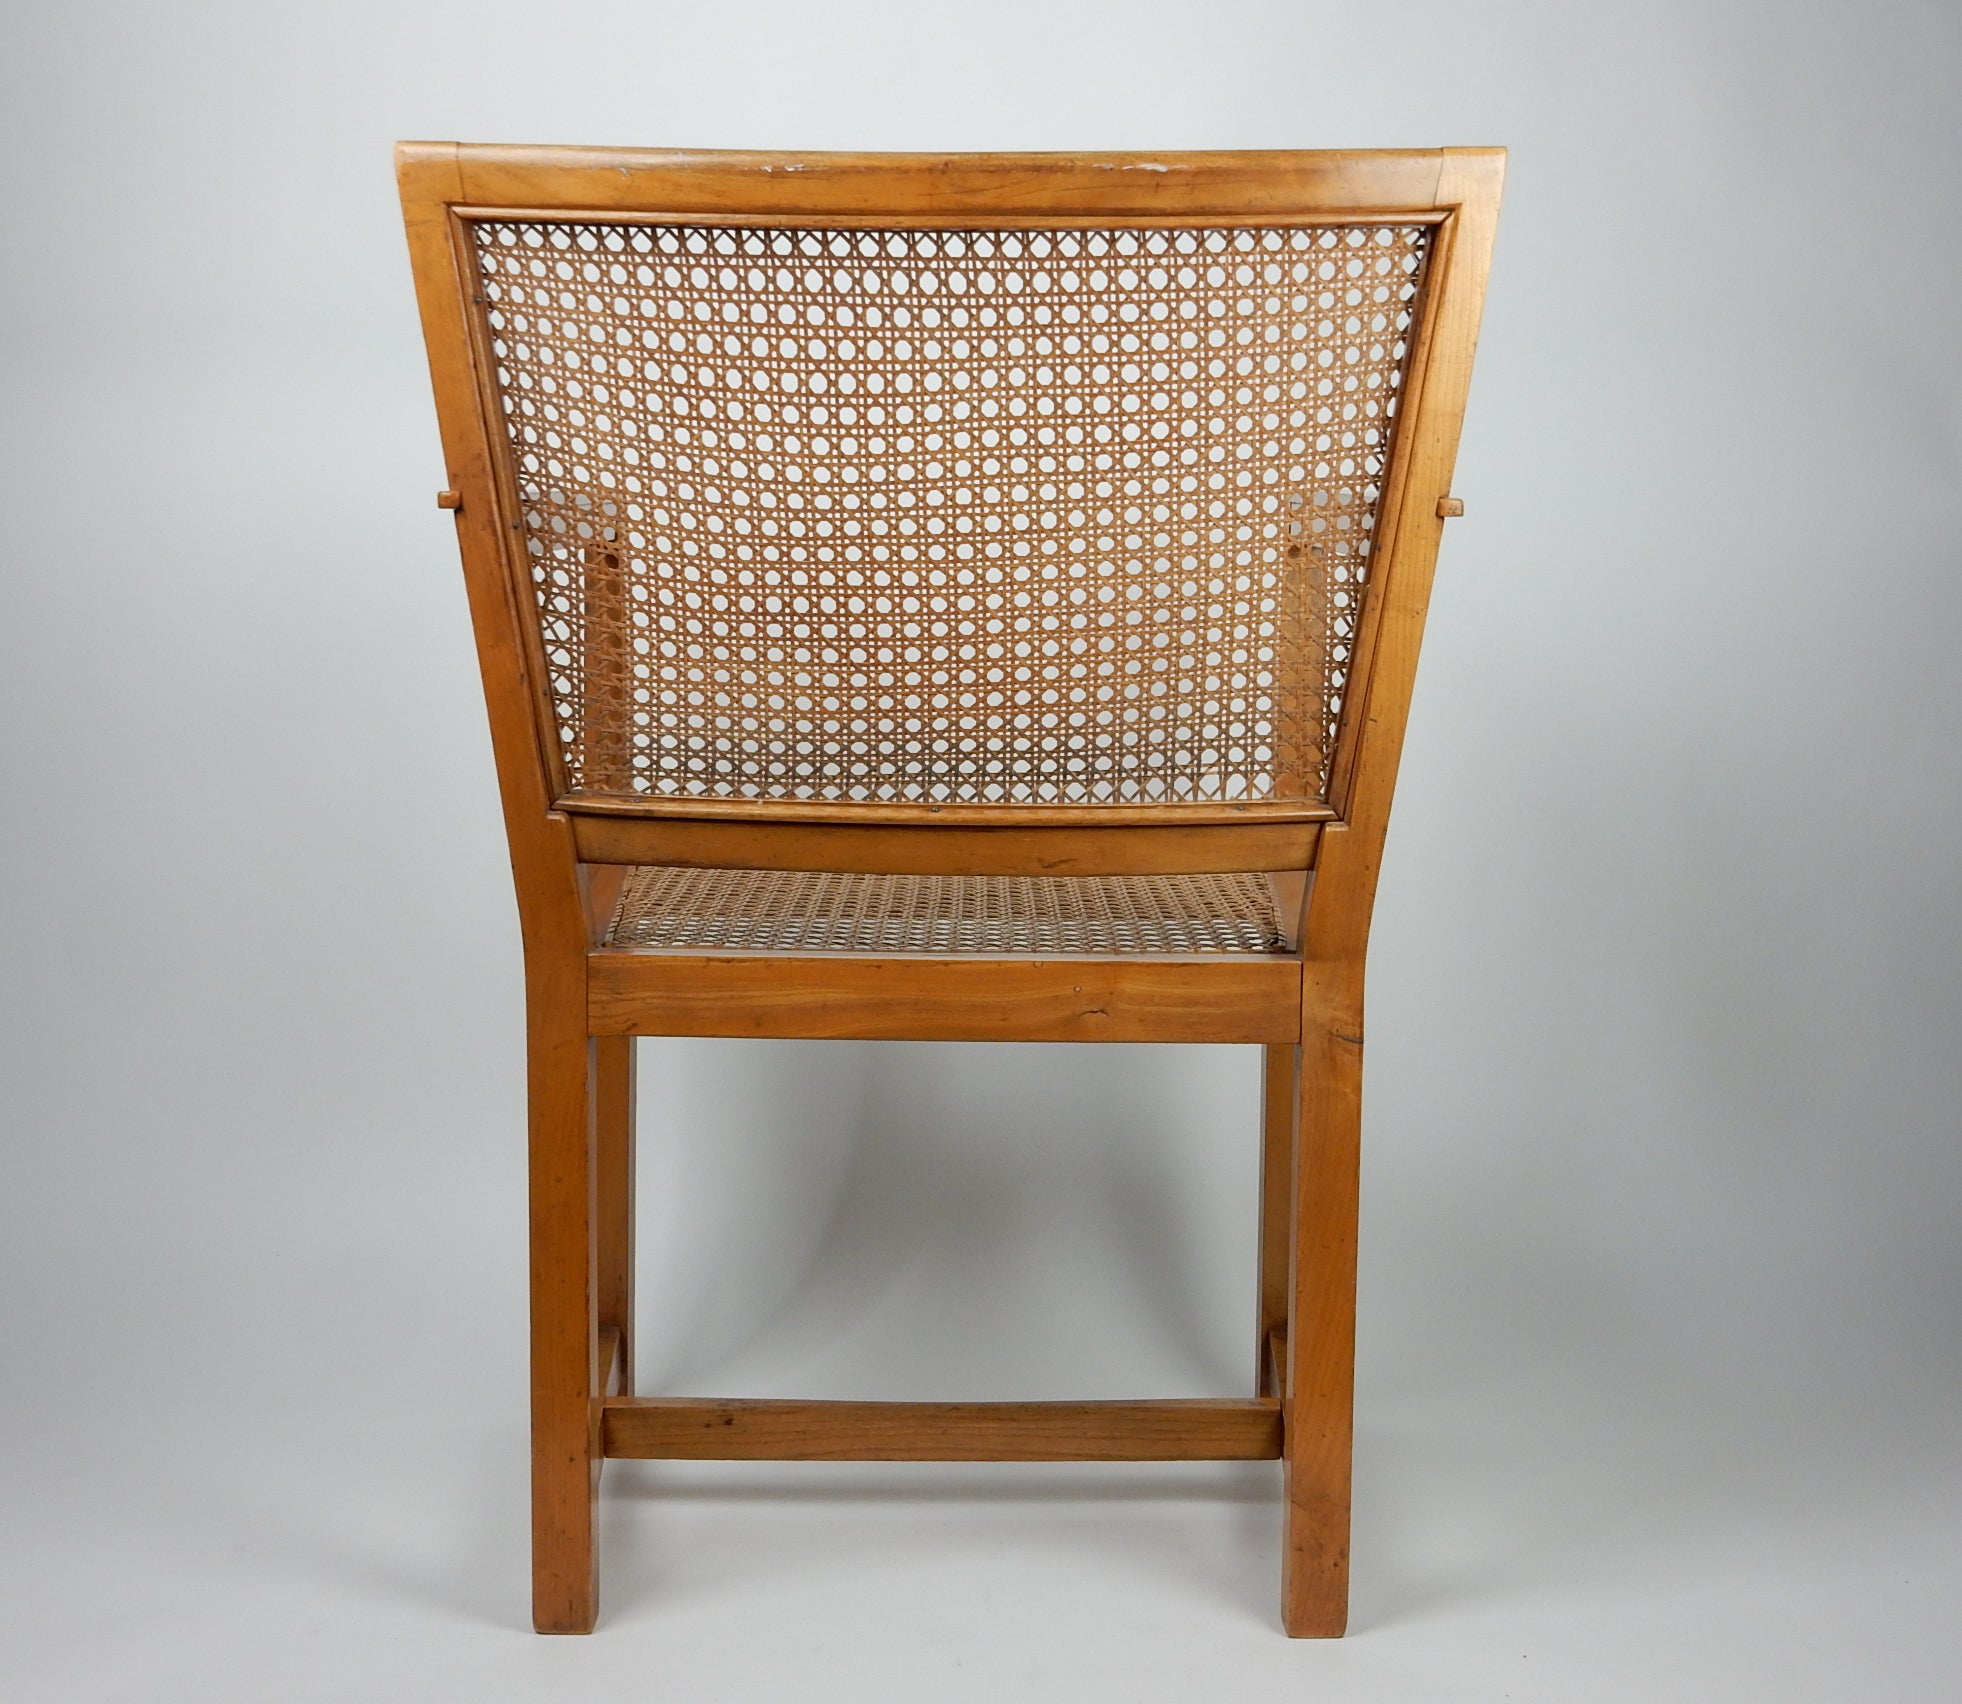 20th Century Architect Oskar Strnad 1879-1935 Pine & Cane Arm Chair 1920's Art Deco For Sale